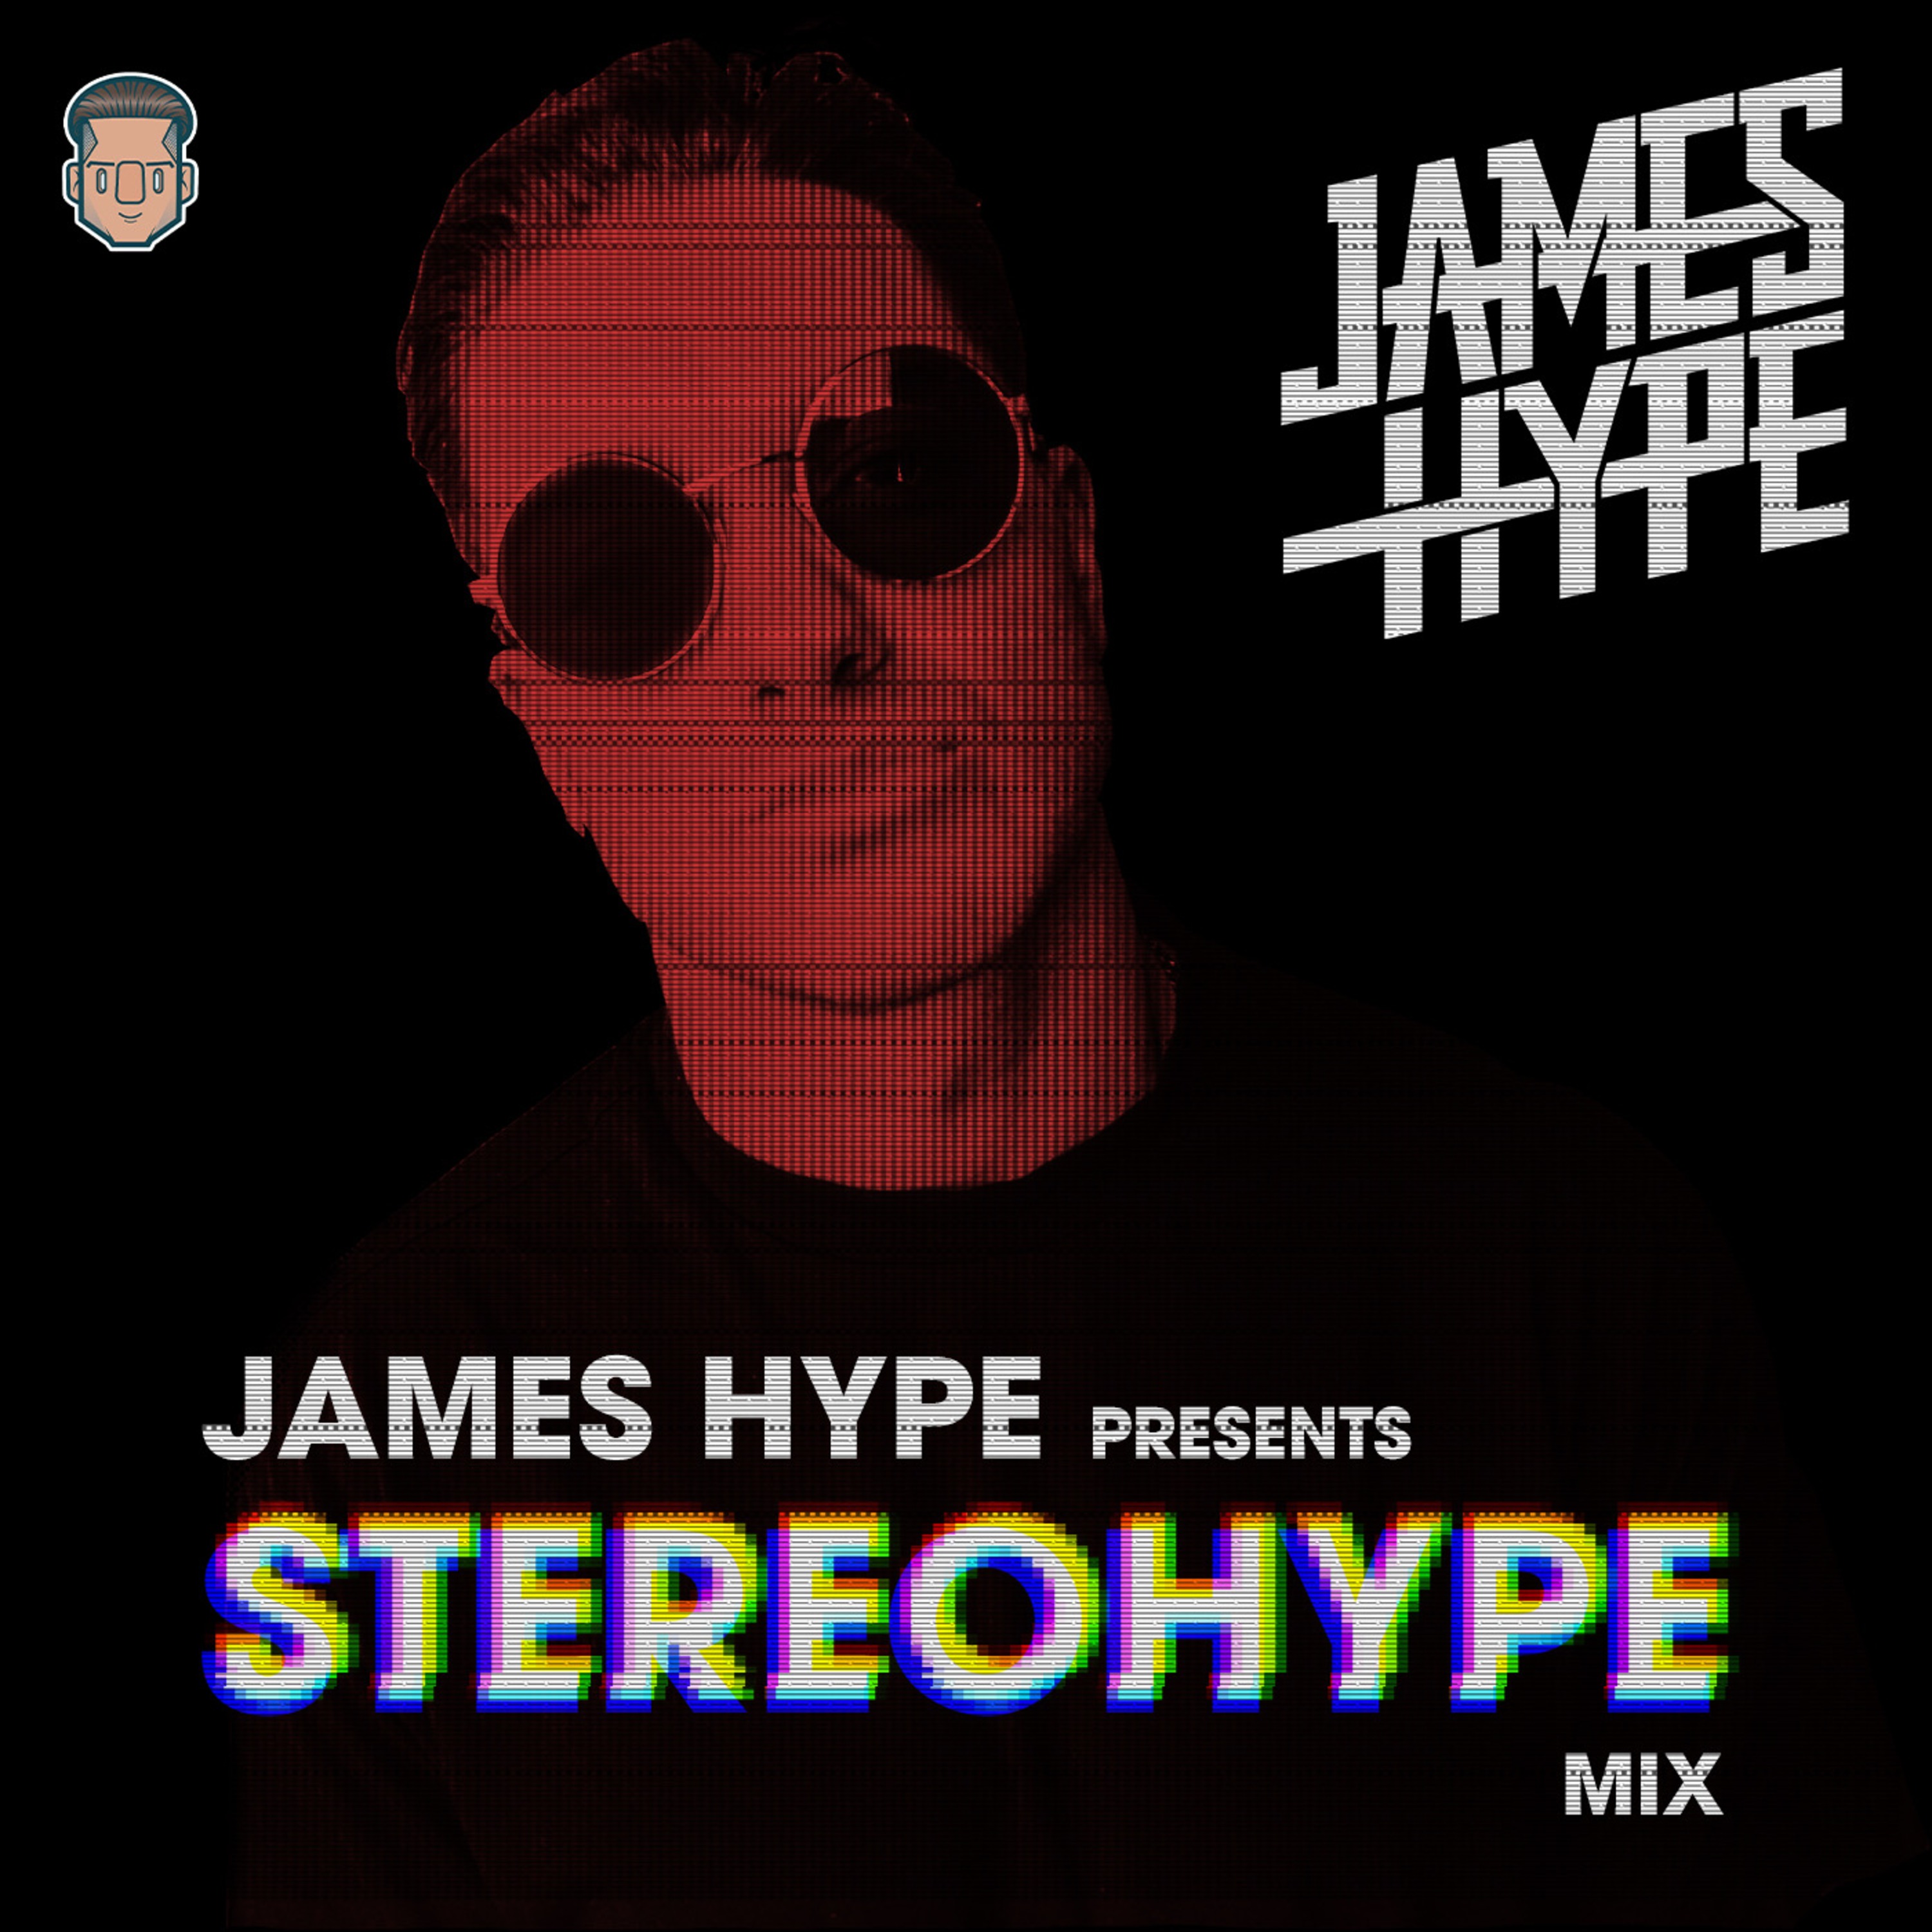 James Hype. Fisher диджей. Stereohype records. James Hype британский диджей. James hype ferrari